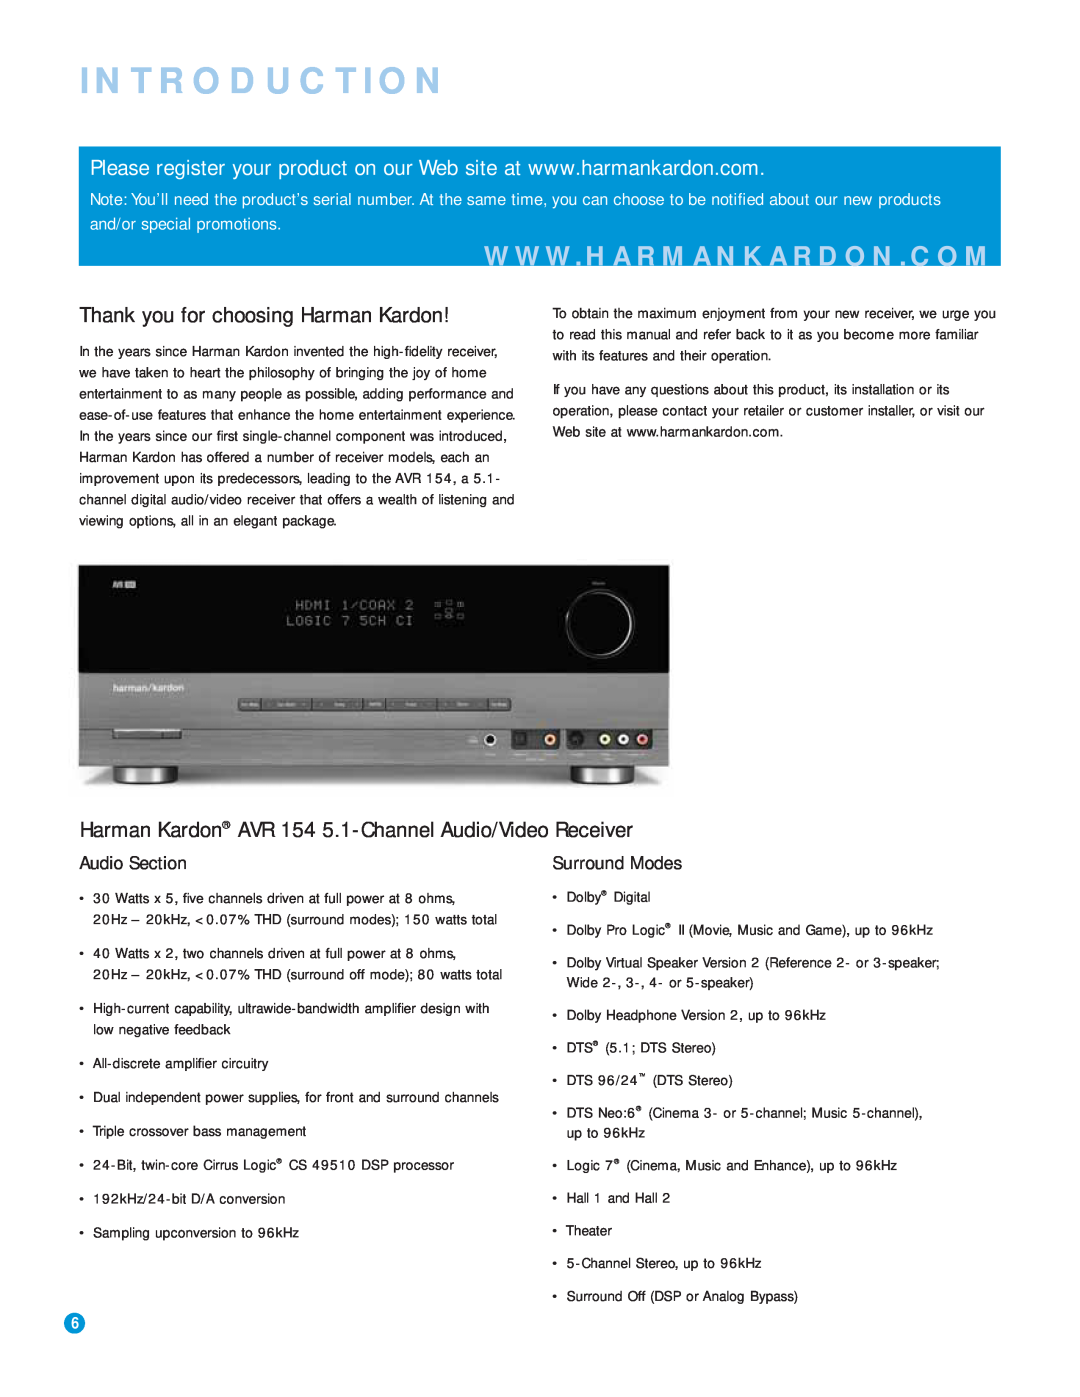 Harman-Kardon AVR 154 owner manual Introduction, Thank you for choosing Harman Kardon, Audio Section, Surround Modes 